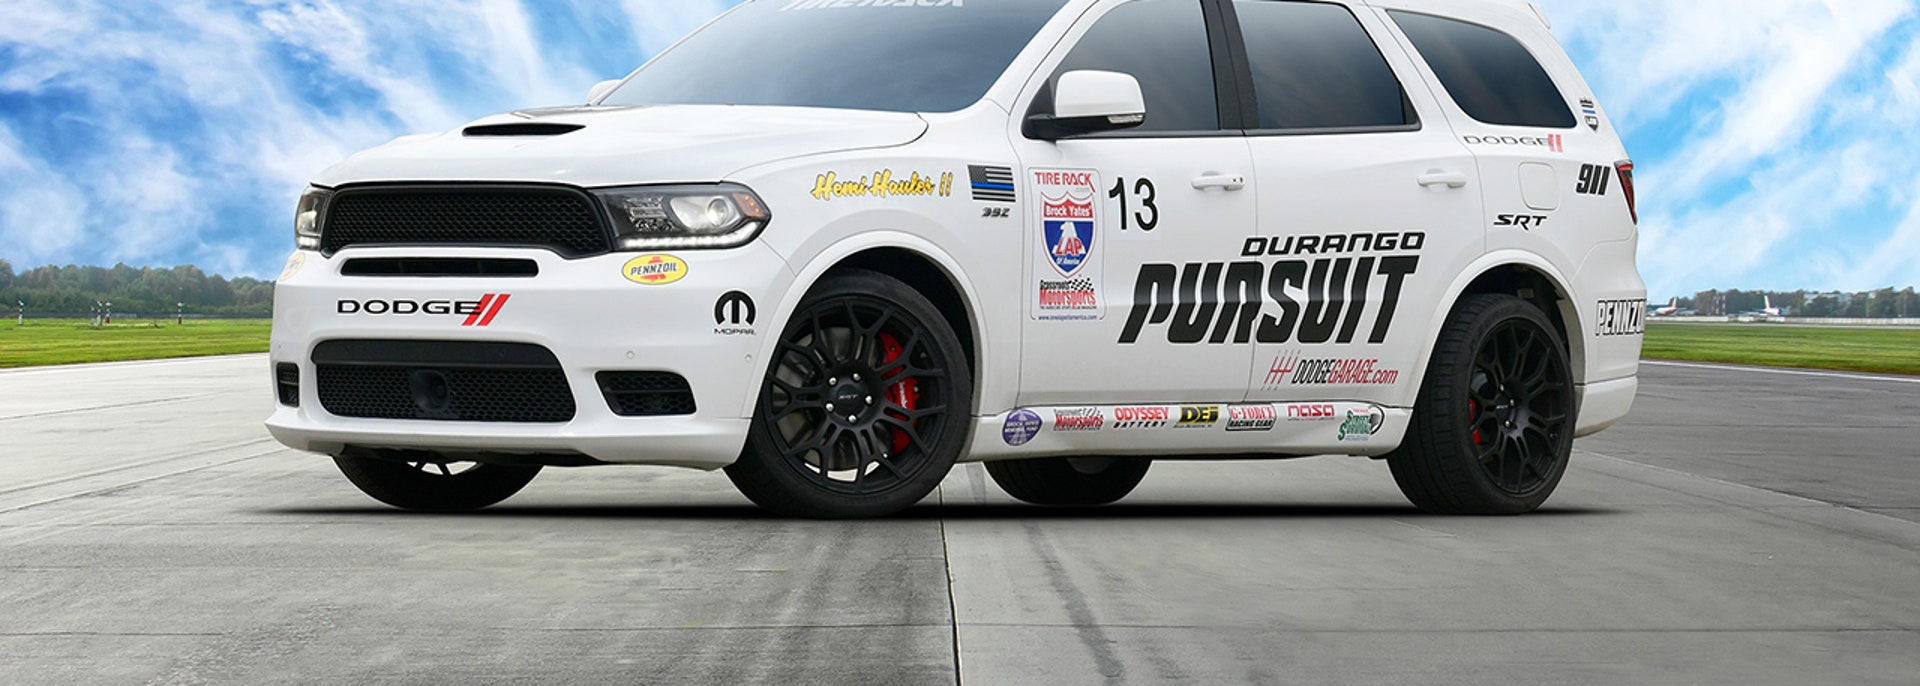 Dodge Durango SRT Pursuit is the mostpowerful 'police' SUV Fox News